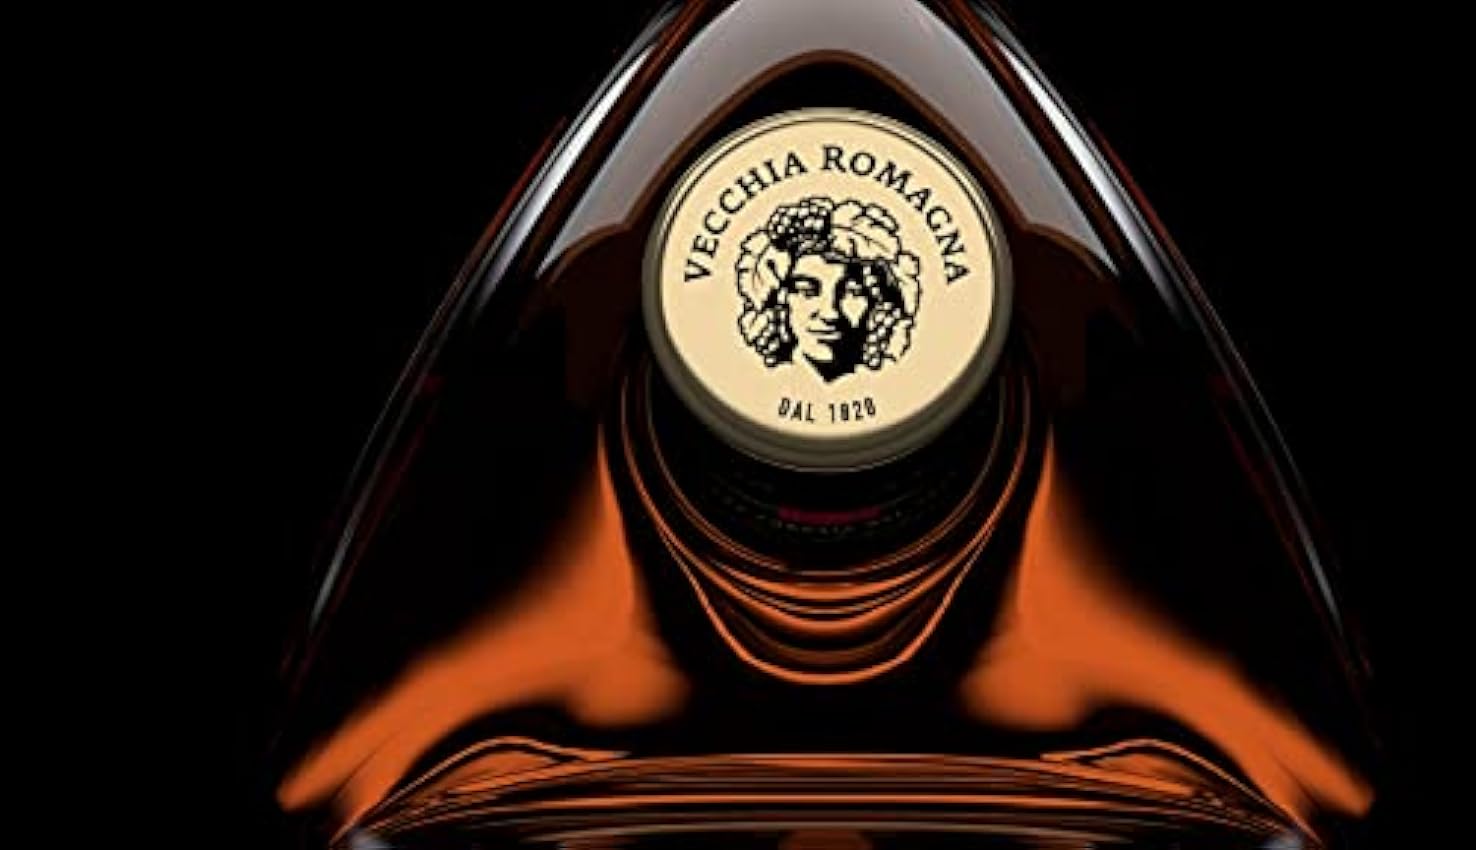 VECCHIA ROMAGNA - Etichetta Nera - Brandy - 38% Alcool - Origine : Italie - Notes de Vanille & Caramel - 70 cl NkCkwCPW